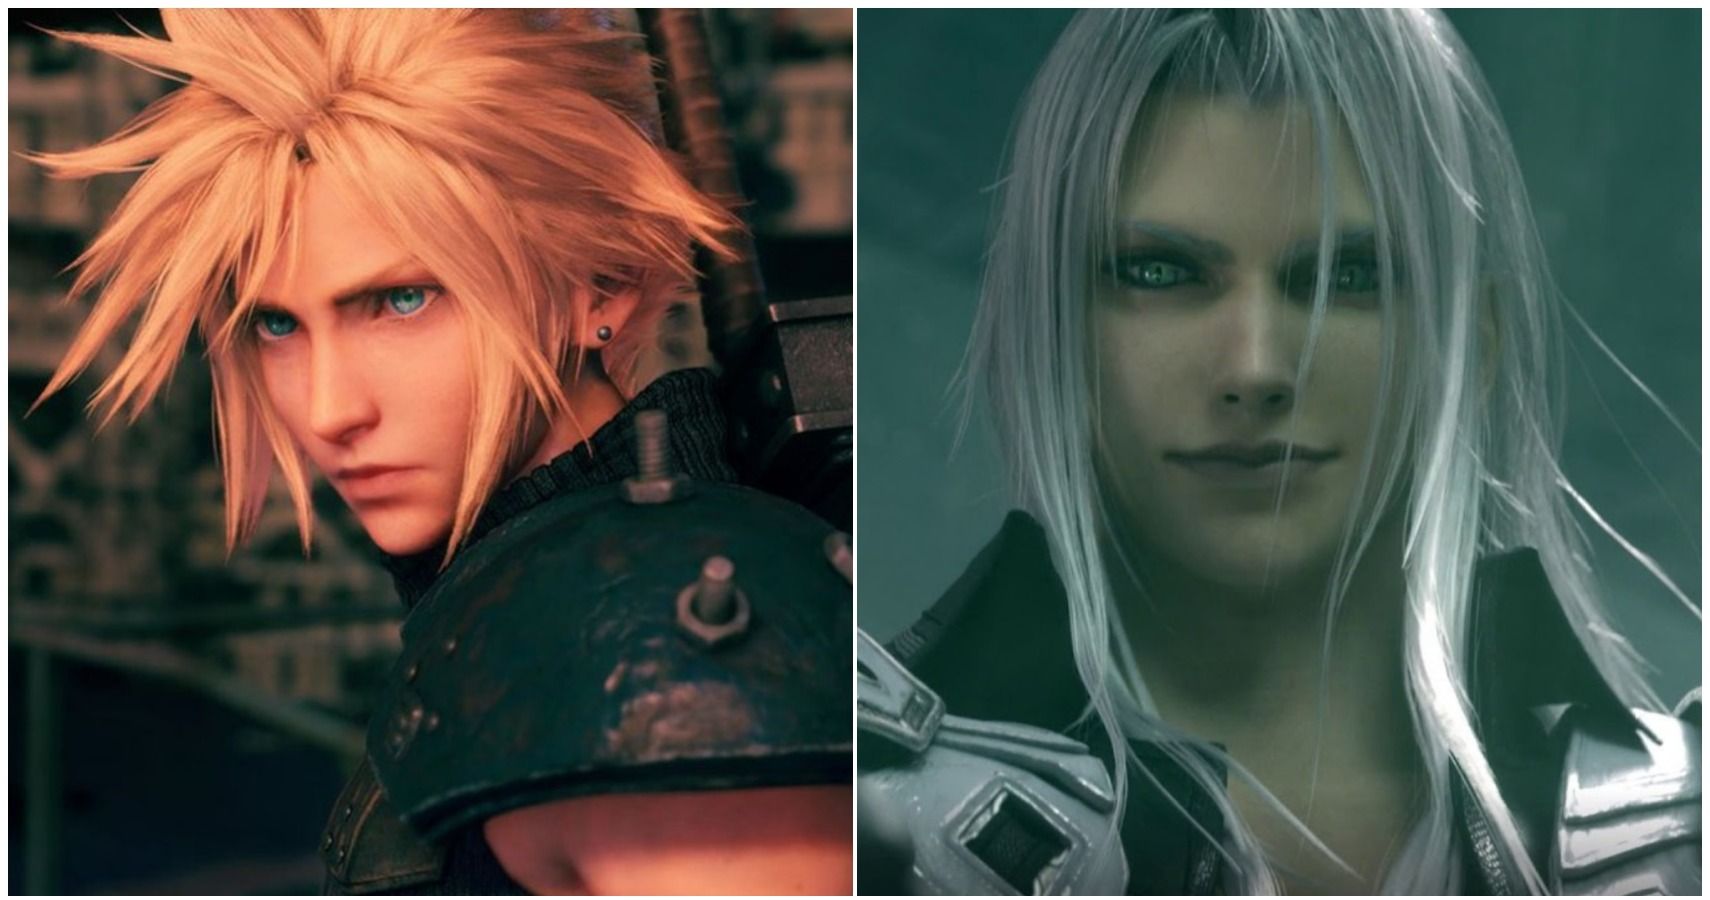 MeuPS4] Compare personagens: Final Fantasy VII vs Final Fantasy